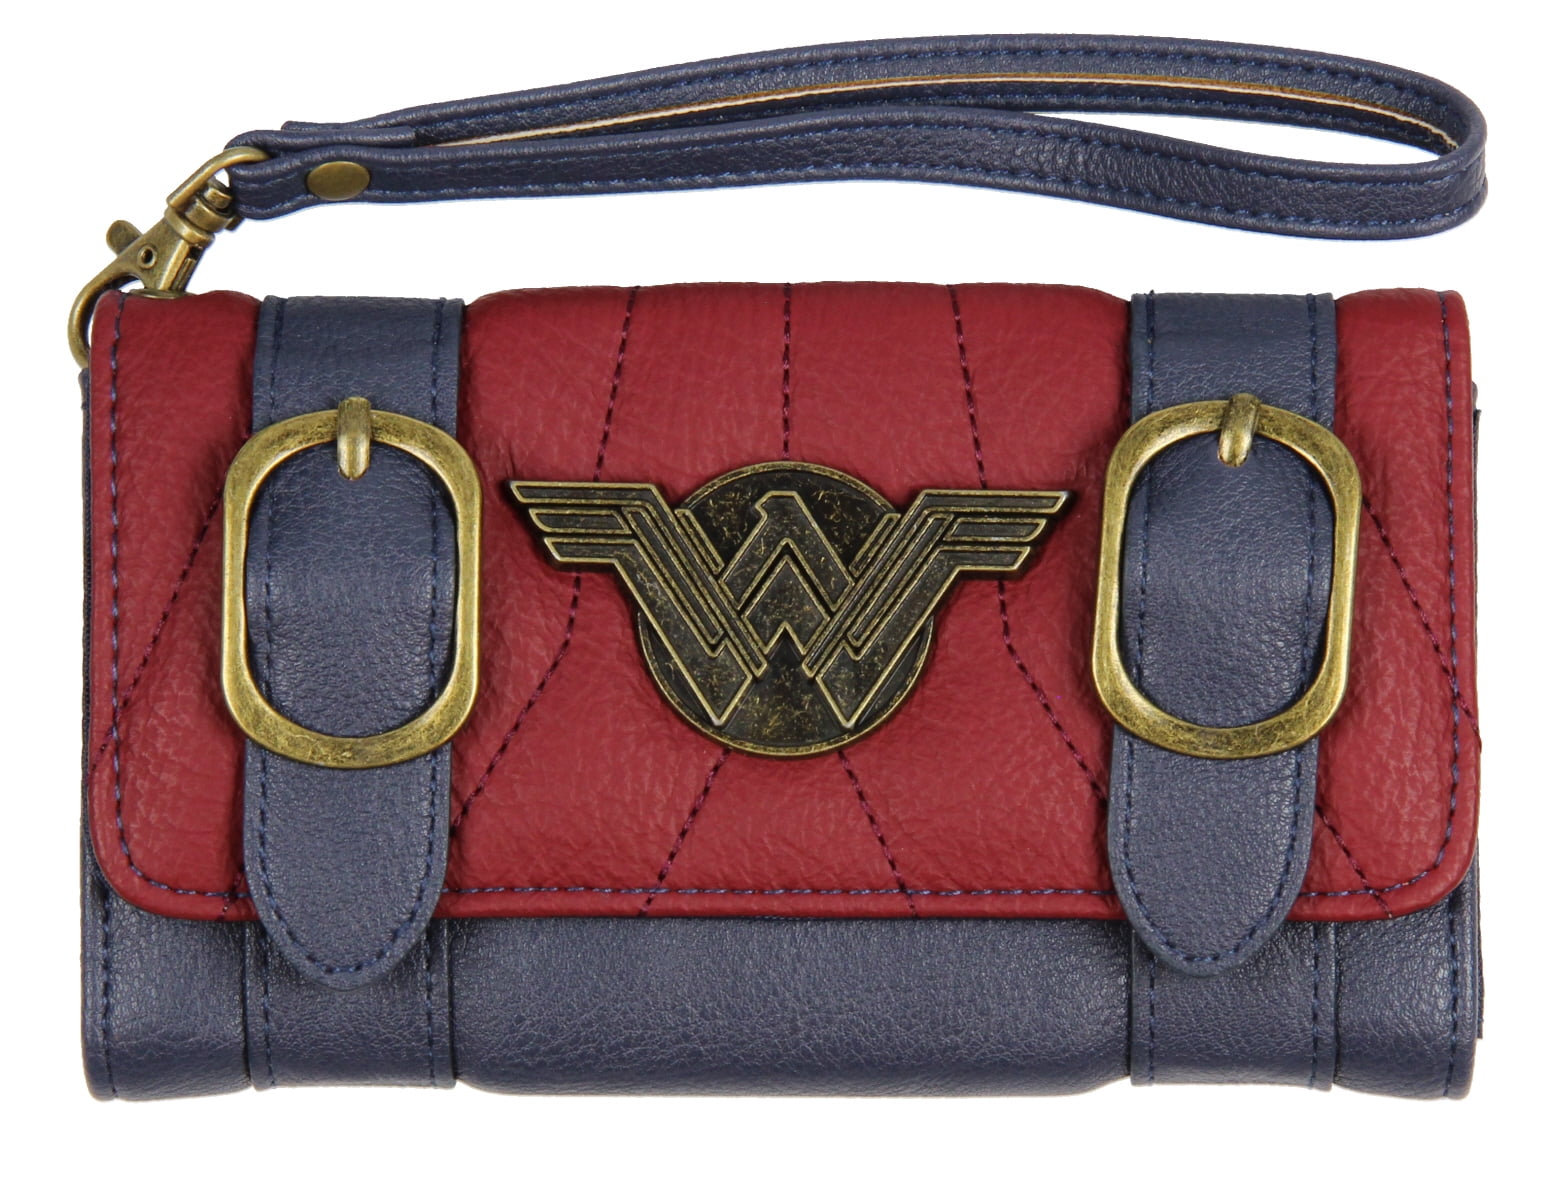 Details about   Women Shoulder bag Wonder Woman Clutch Bag Leather pu Purse Casual Handbags Gift 